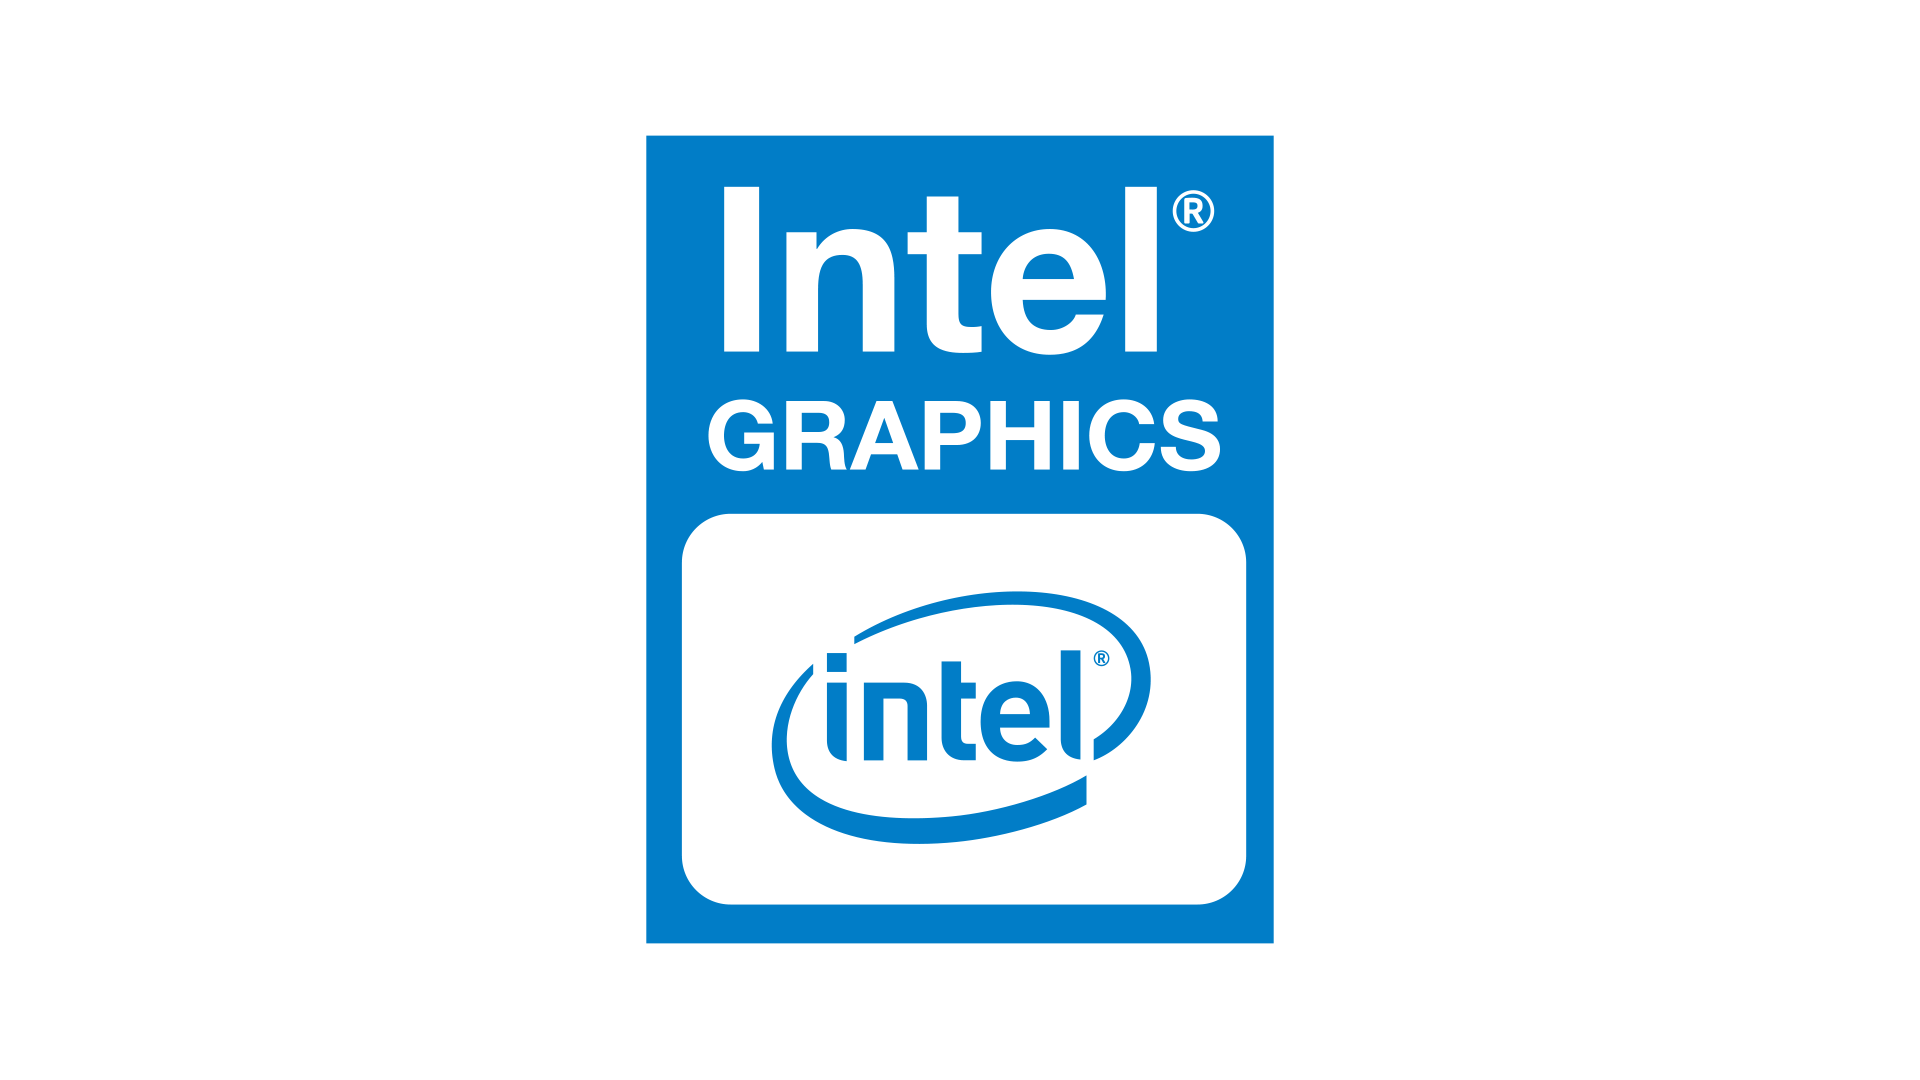 Intel mobile graphic. Интел драйвера. Intel Graphics. Intel Graphics Driver.